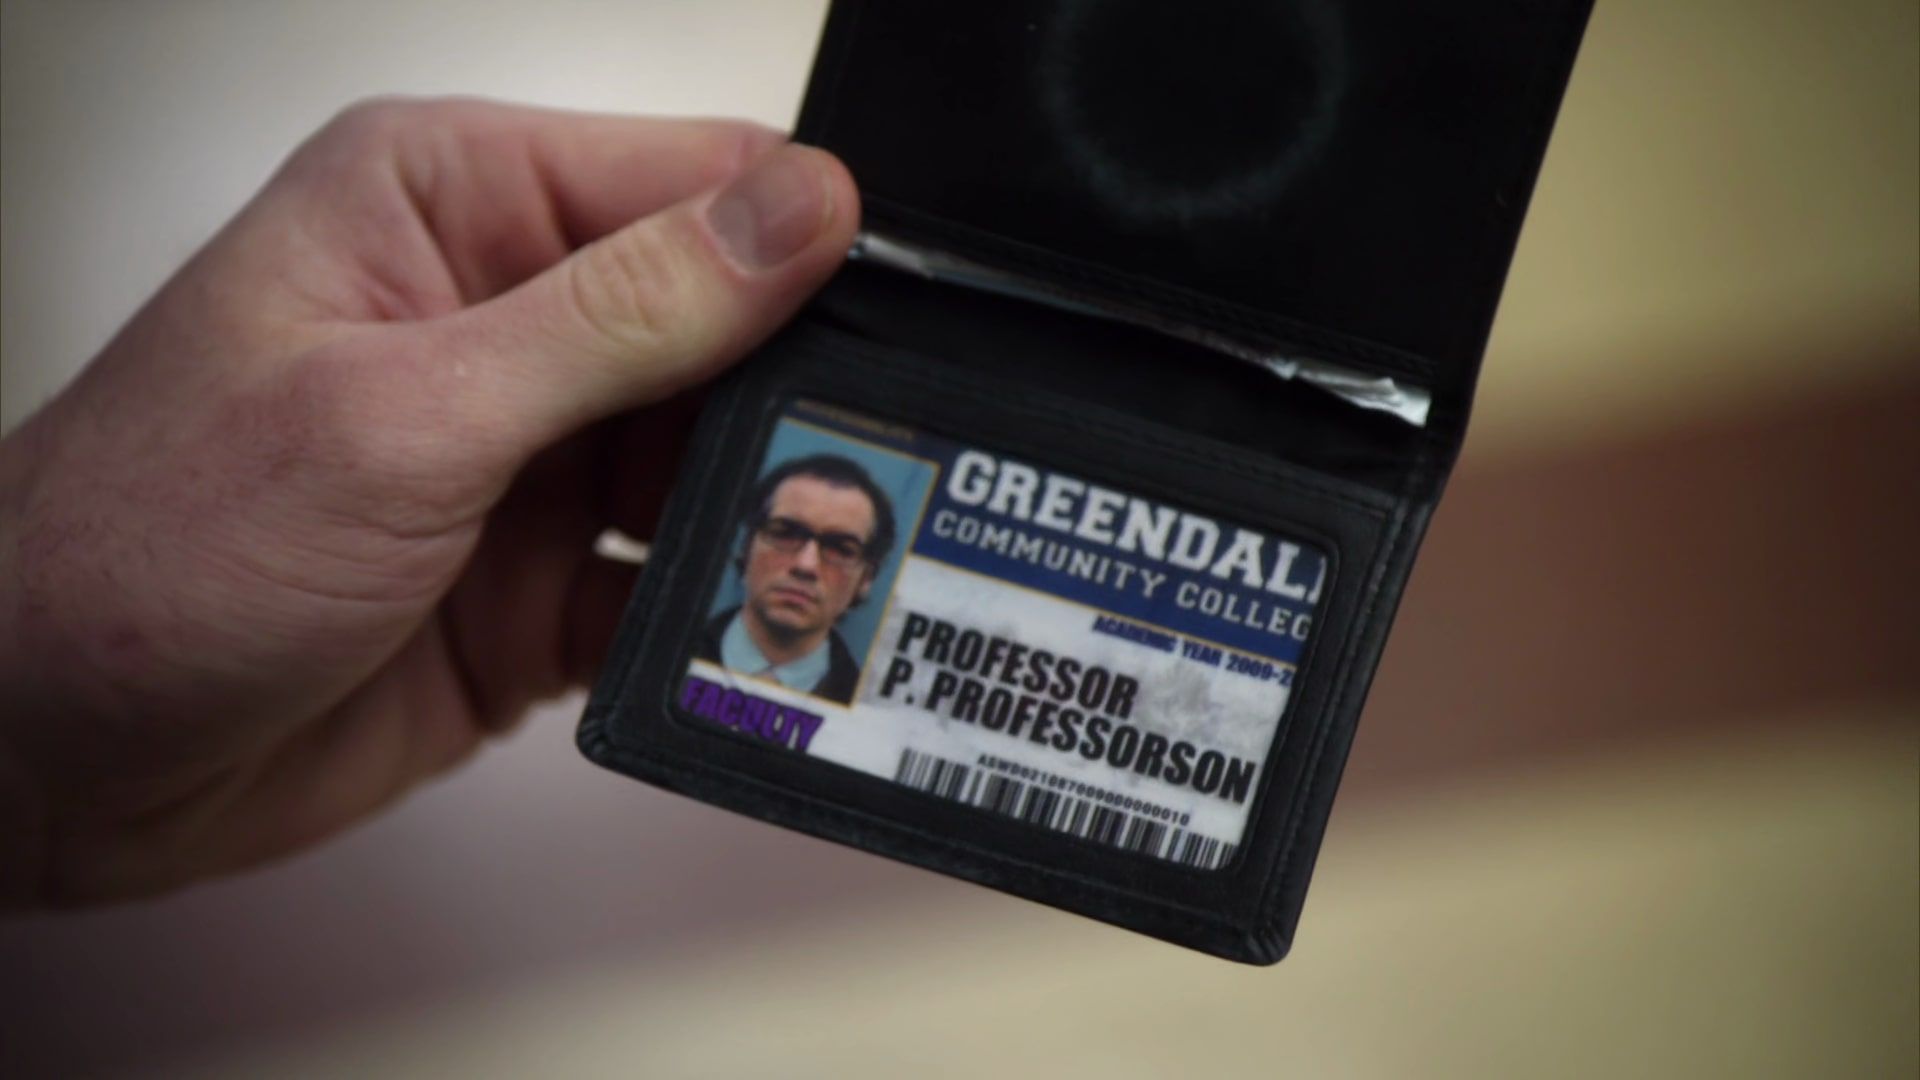 An image from Community of Professor Professorson's ID 